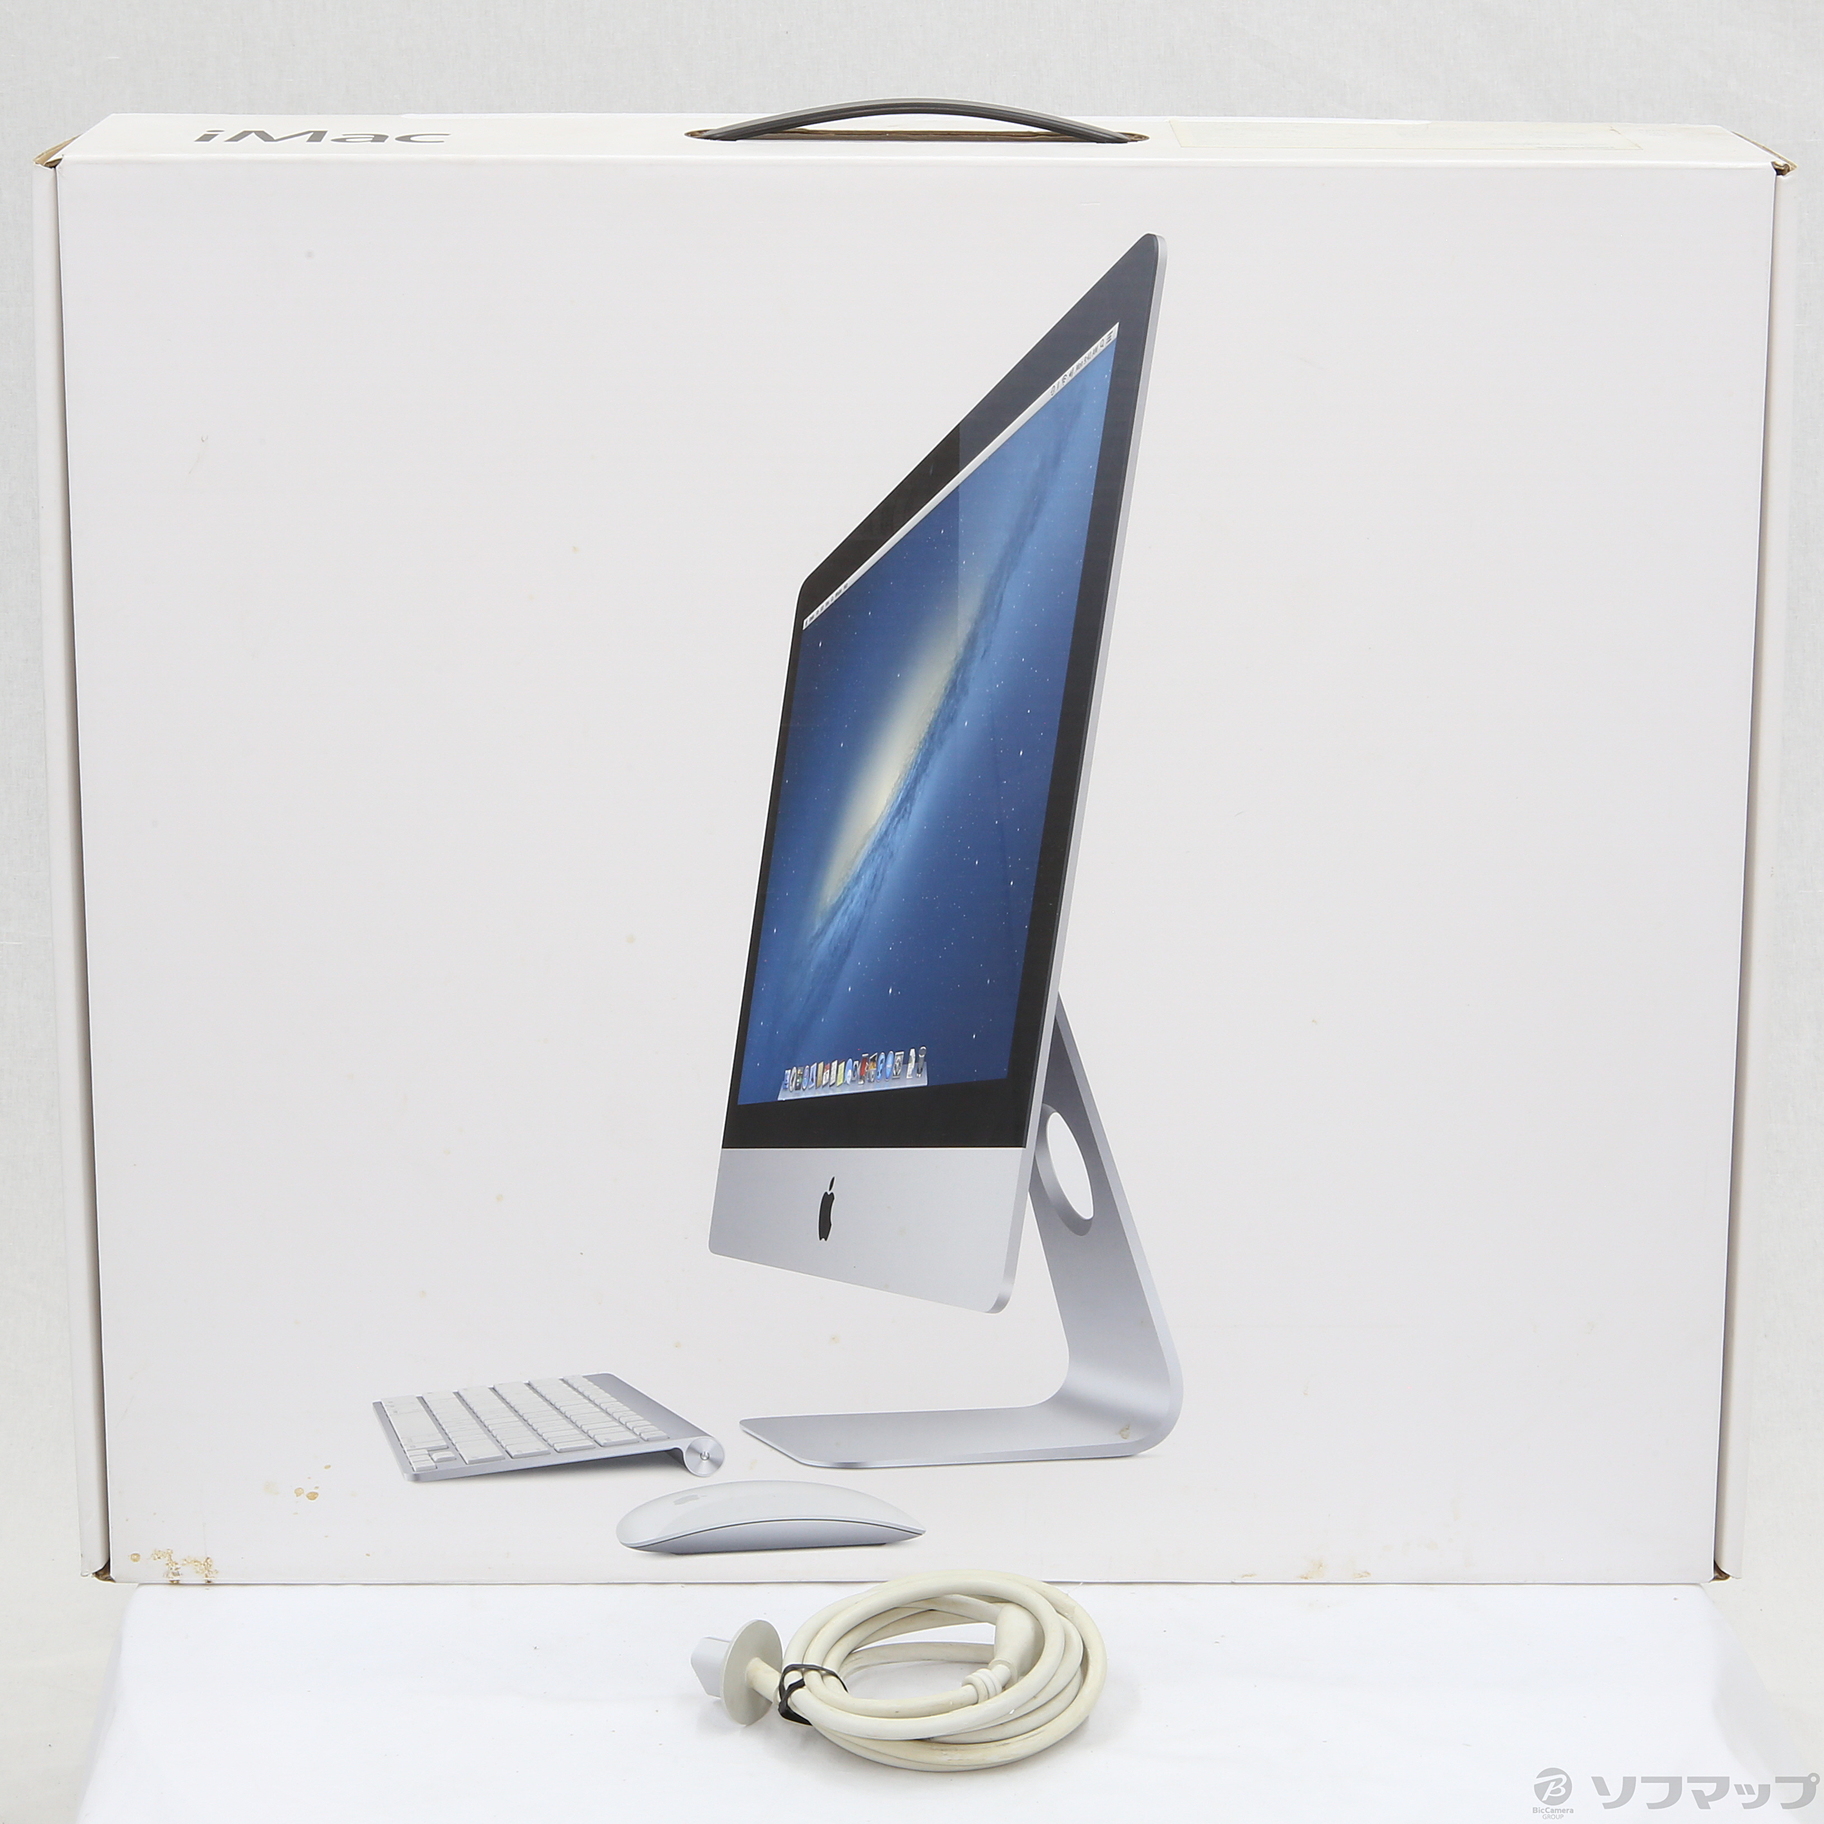 中古】iMac 21.5-inch Late 2012 MD093J／A Core_i5 2.7GHz 8GB HDD1TB ...